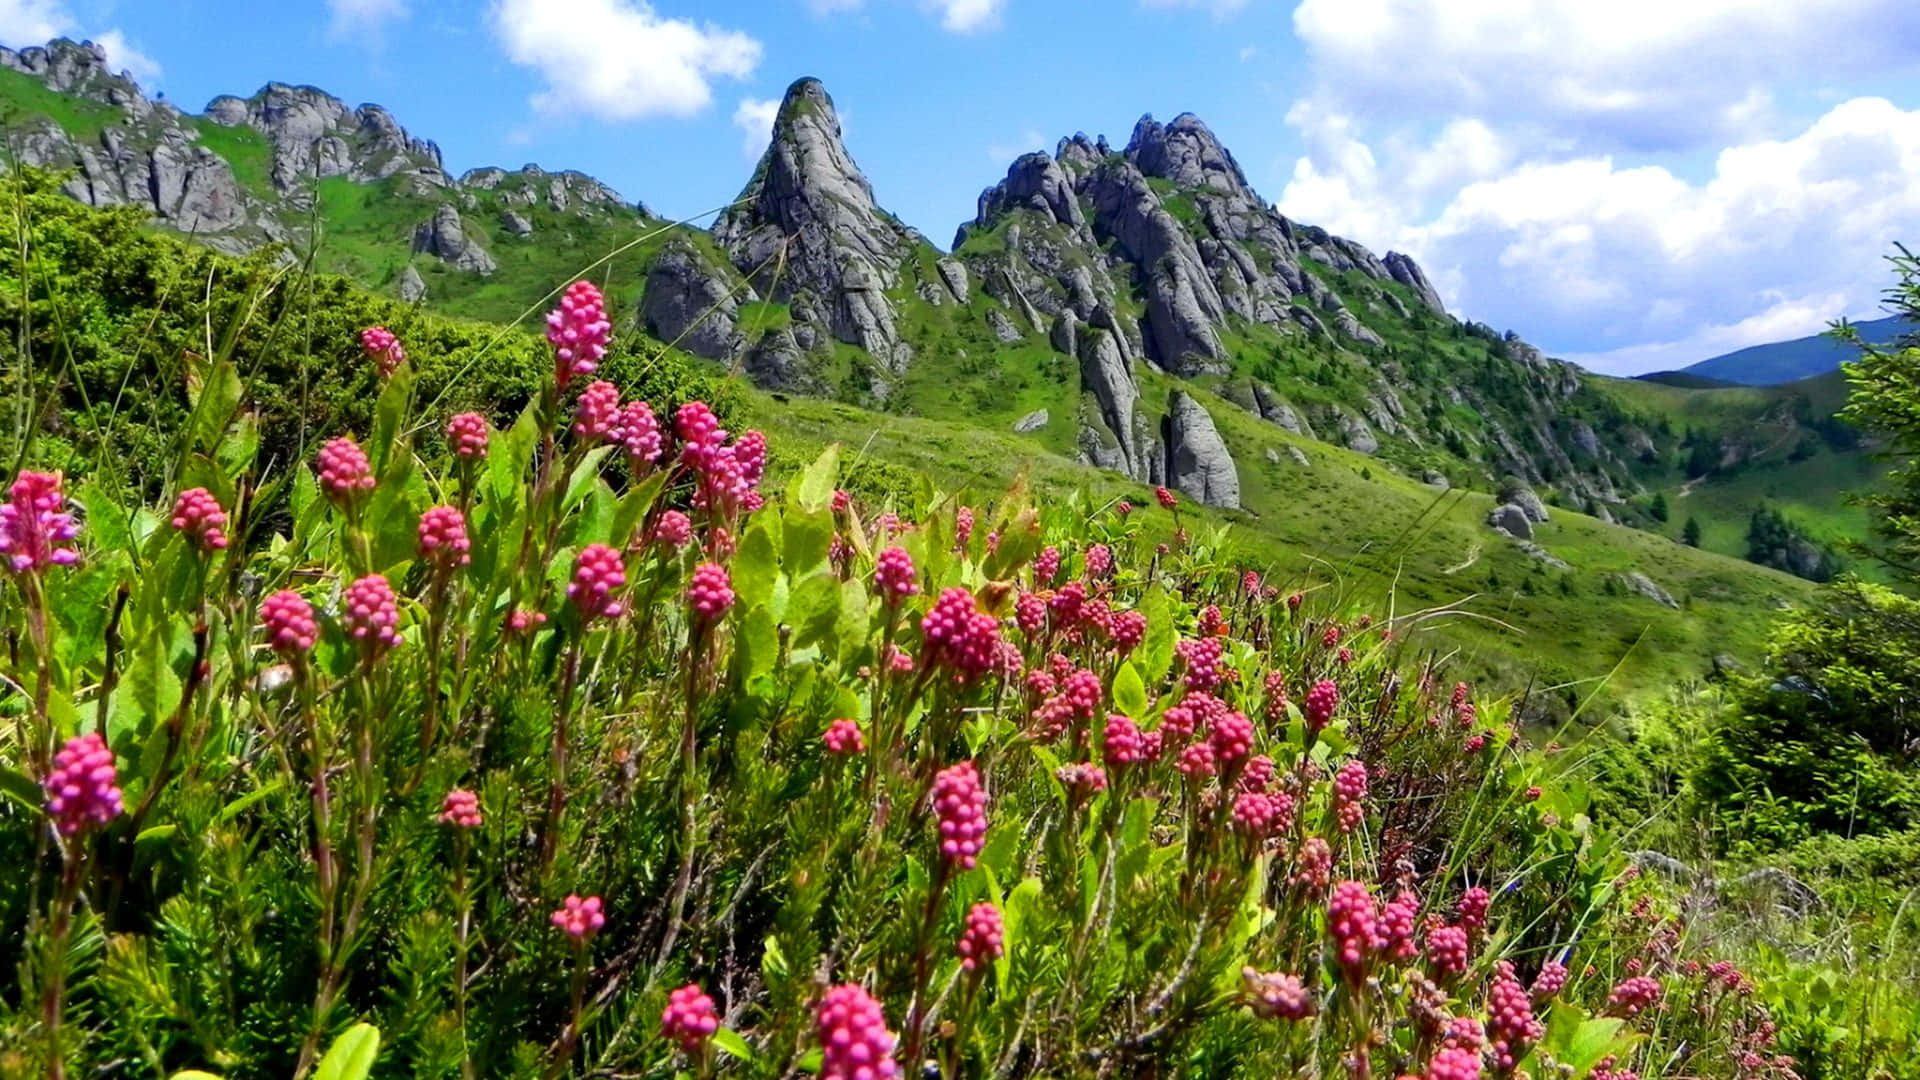 Mountain Wild Flowers Picture Landscape